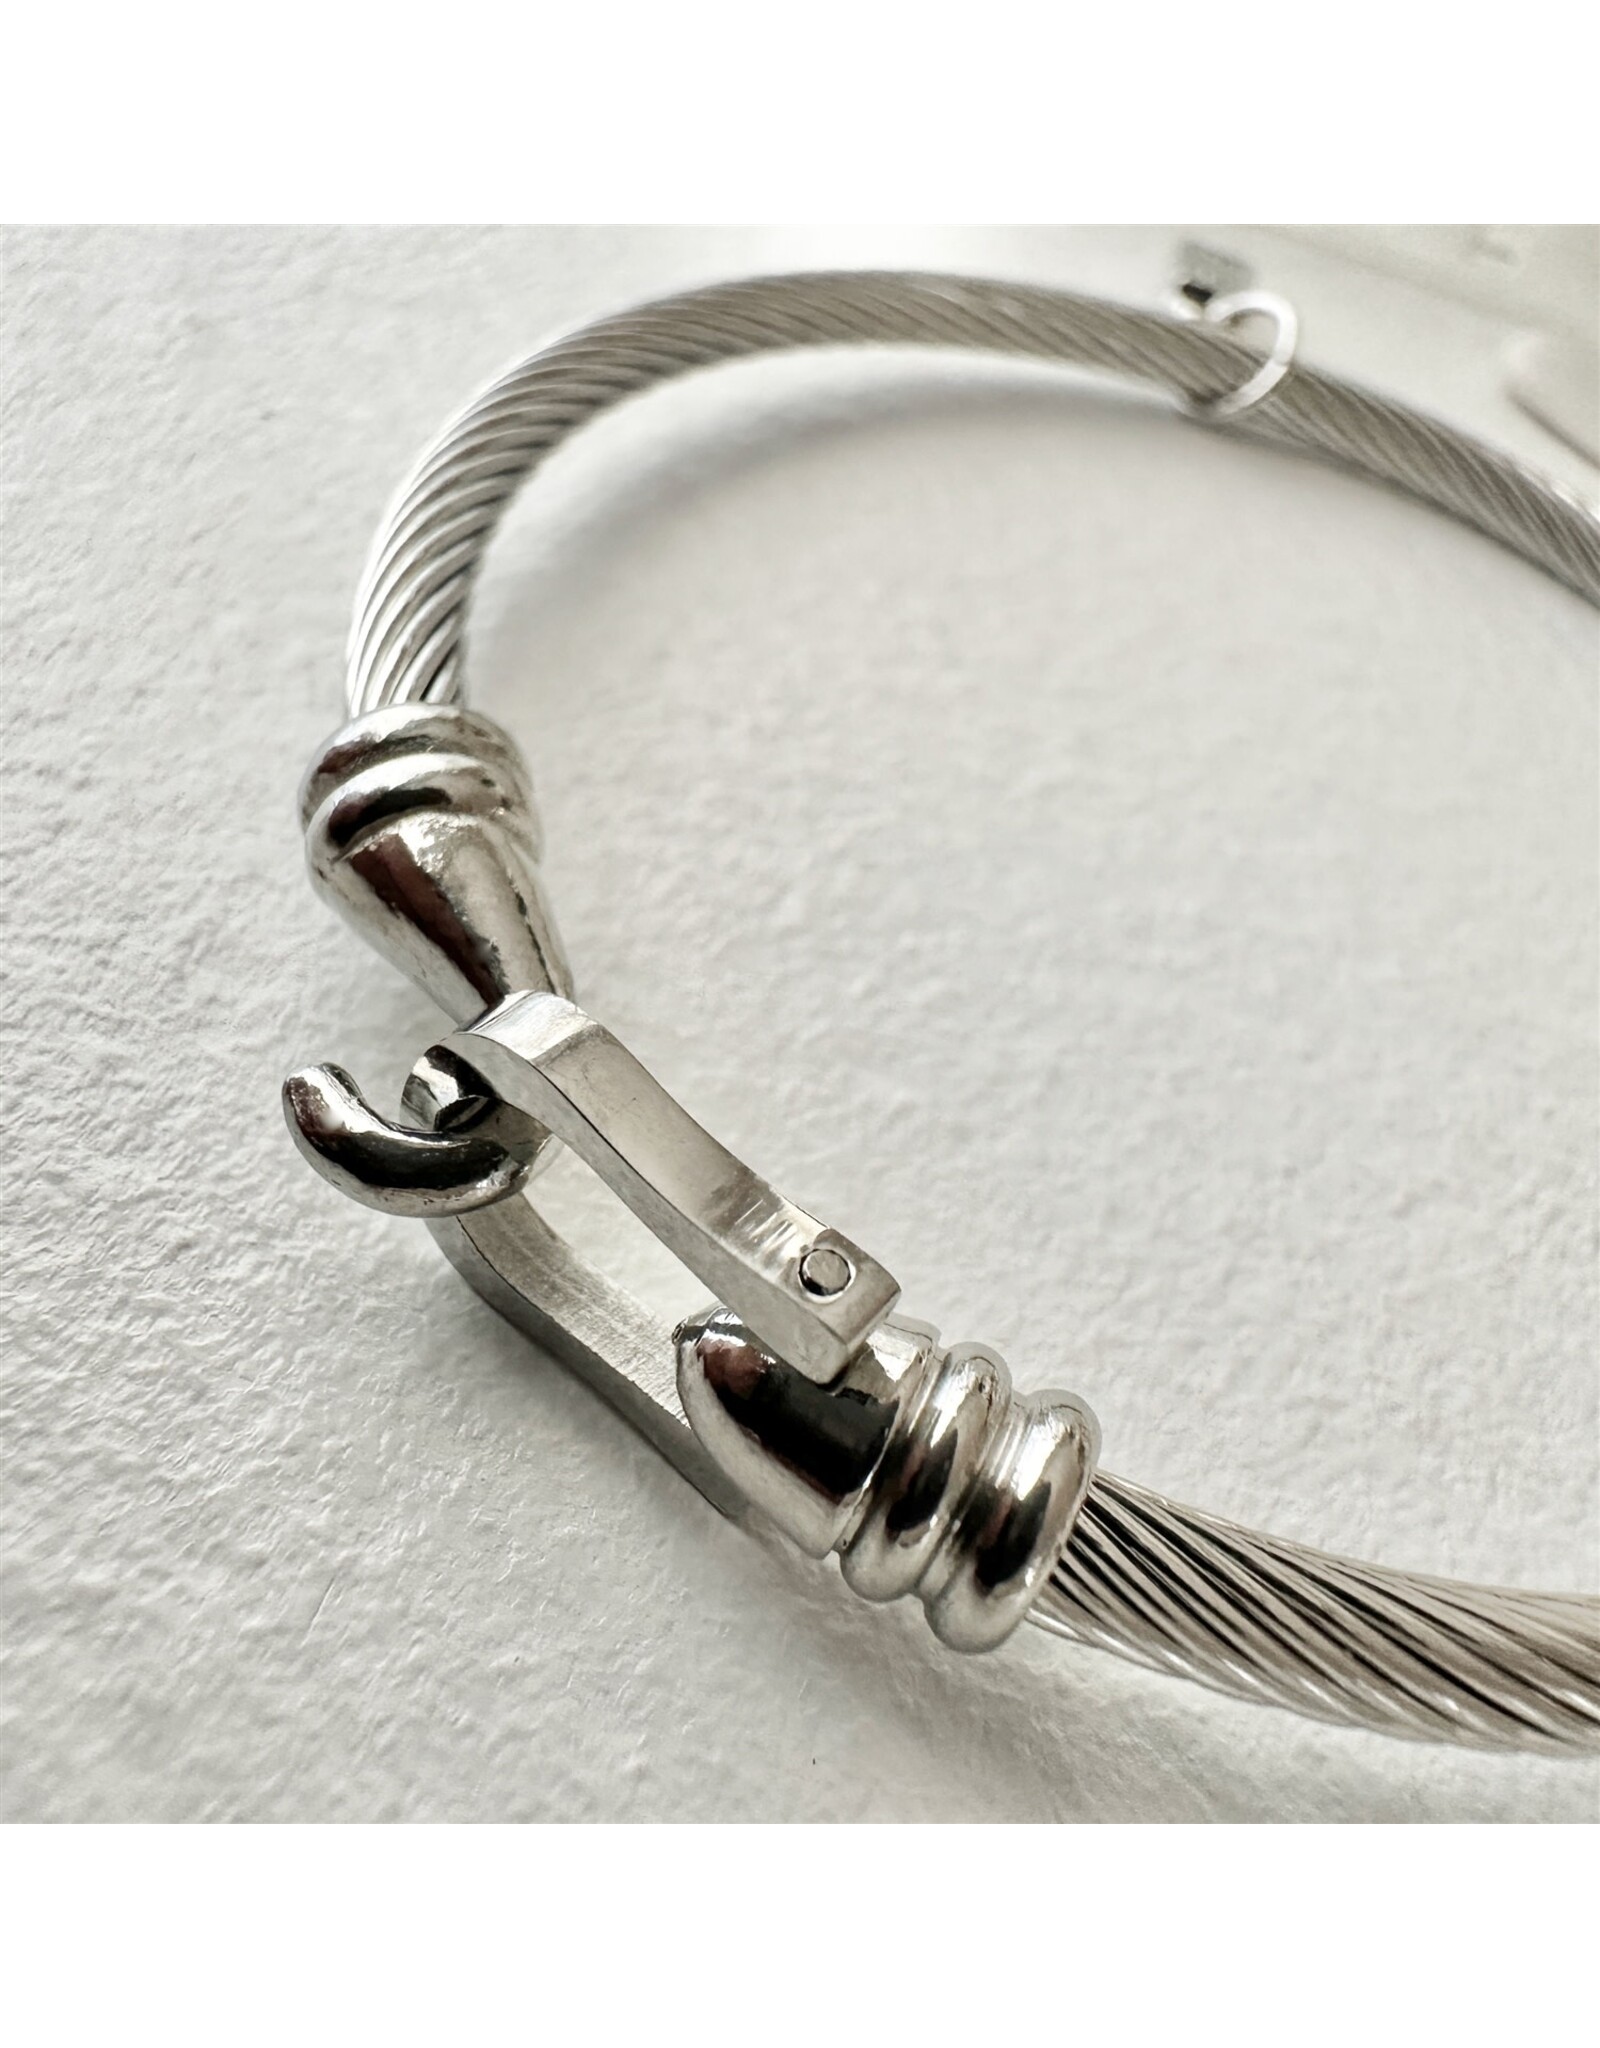 Pika & Bear Pika & Bear - Ascot Chain Bracelet with Buckle Clasp - Silver